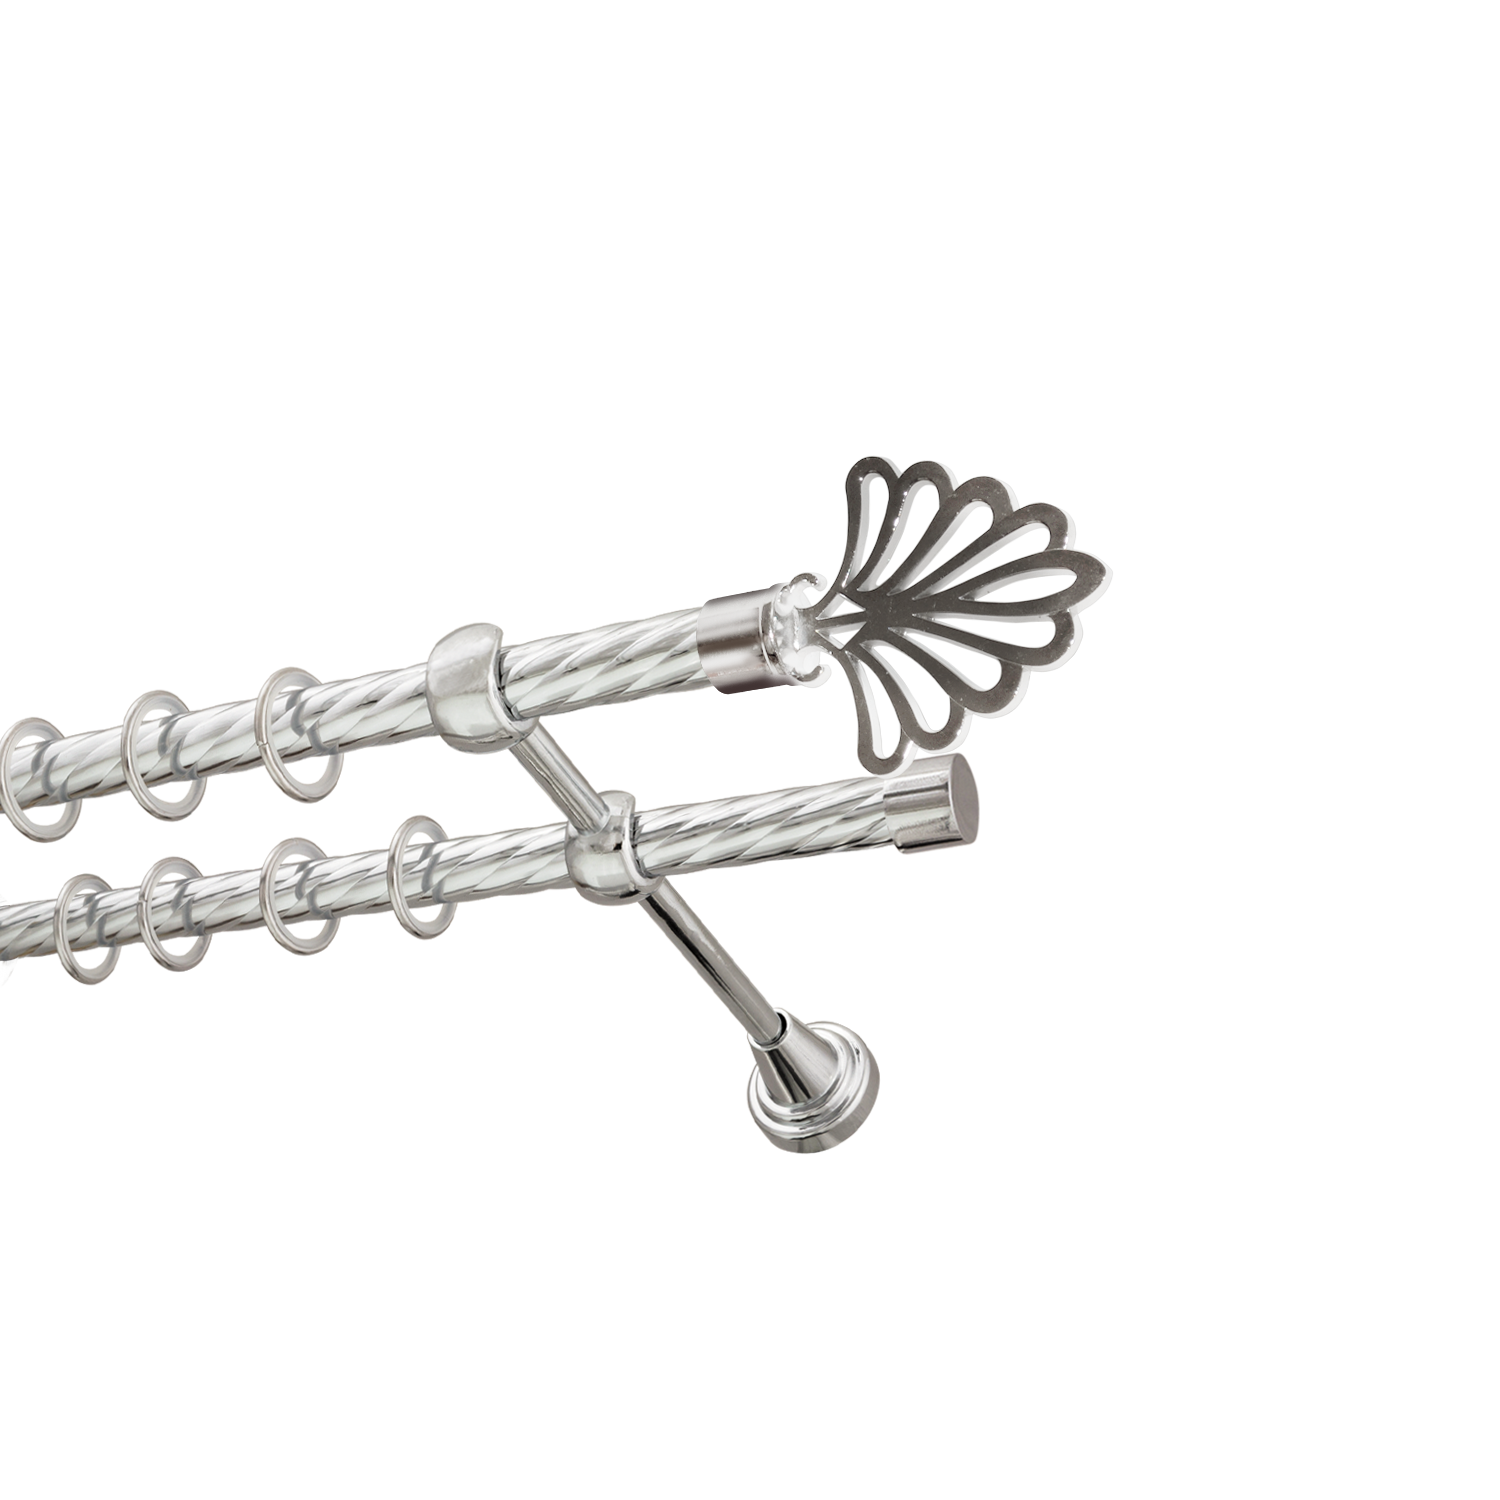 Металлический карниз для штор Бутик, двухрядный 16/16 мм, серебро, витая штанга, длина 240 см - фото Wikidecor.ru